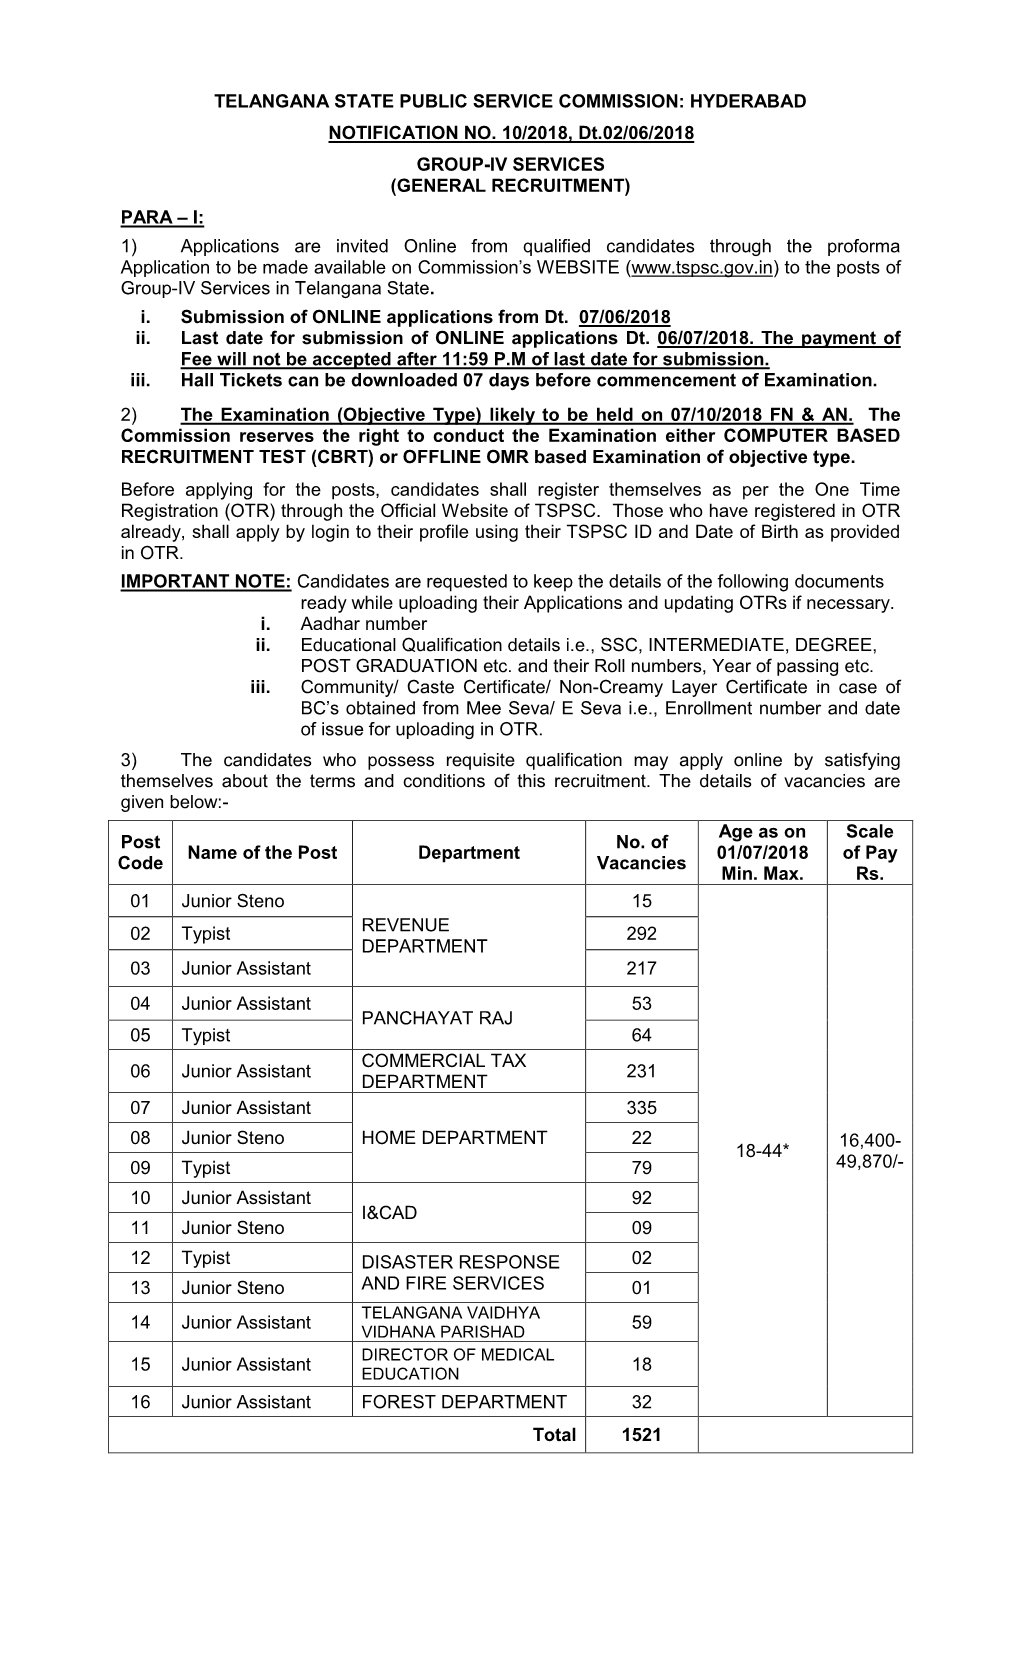 Telangana State Public Service Commission: Hyderabad Notification No